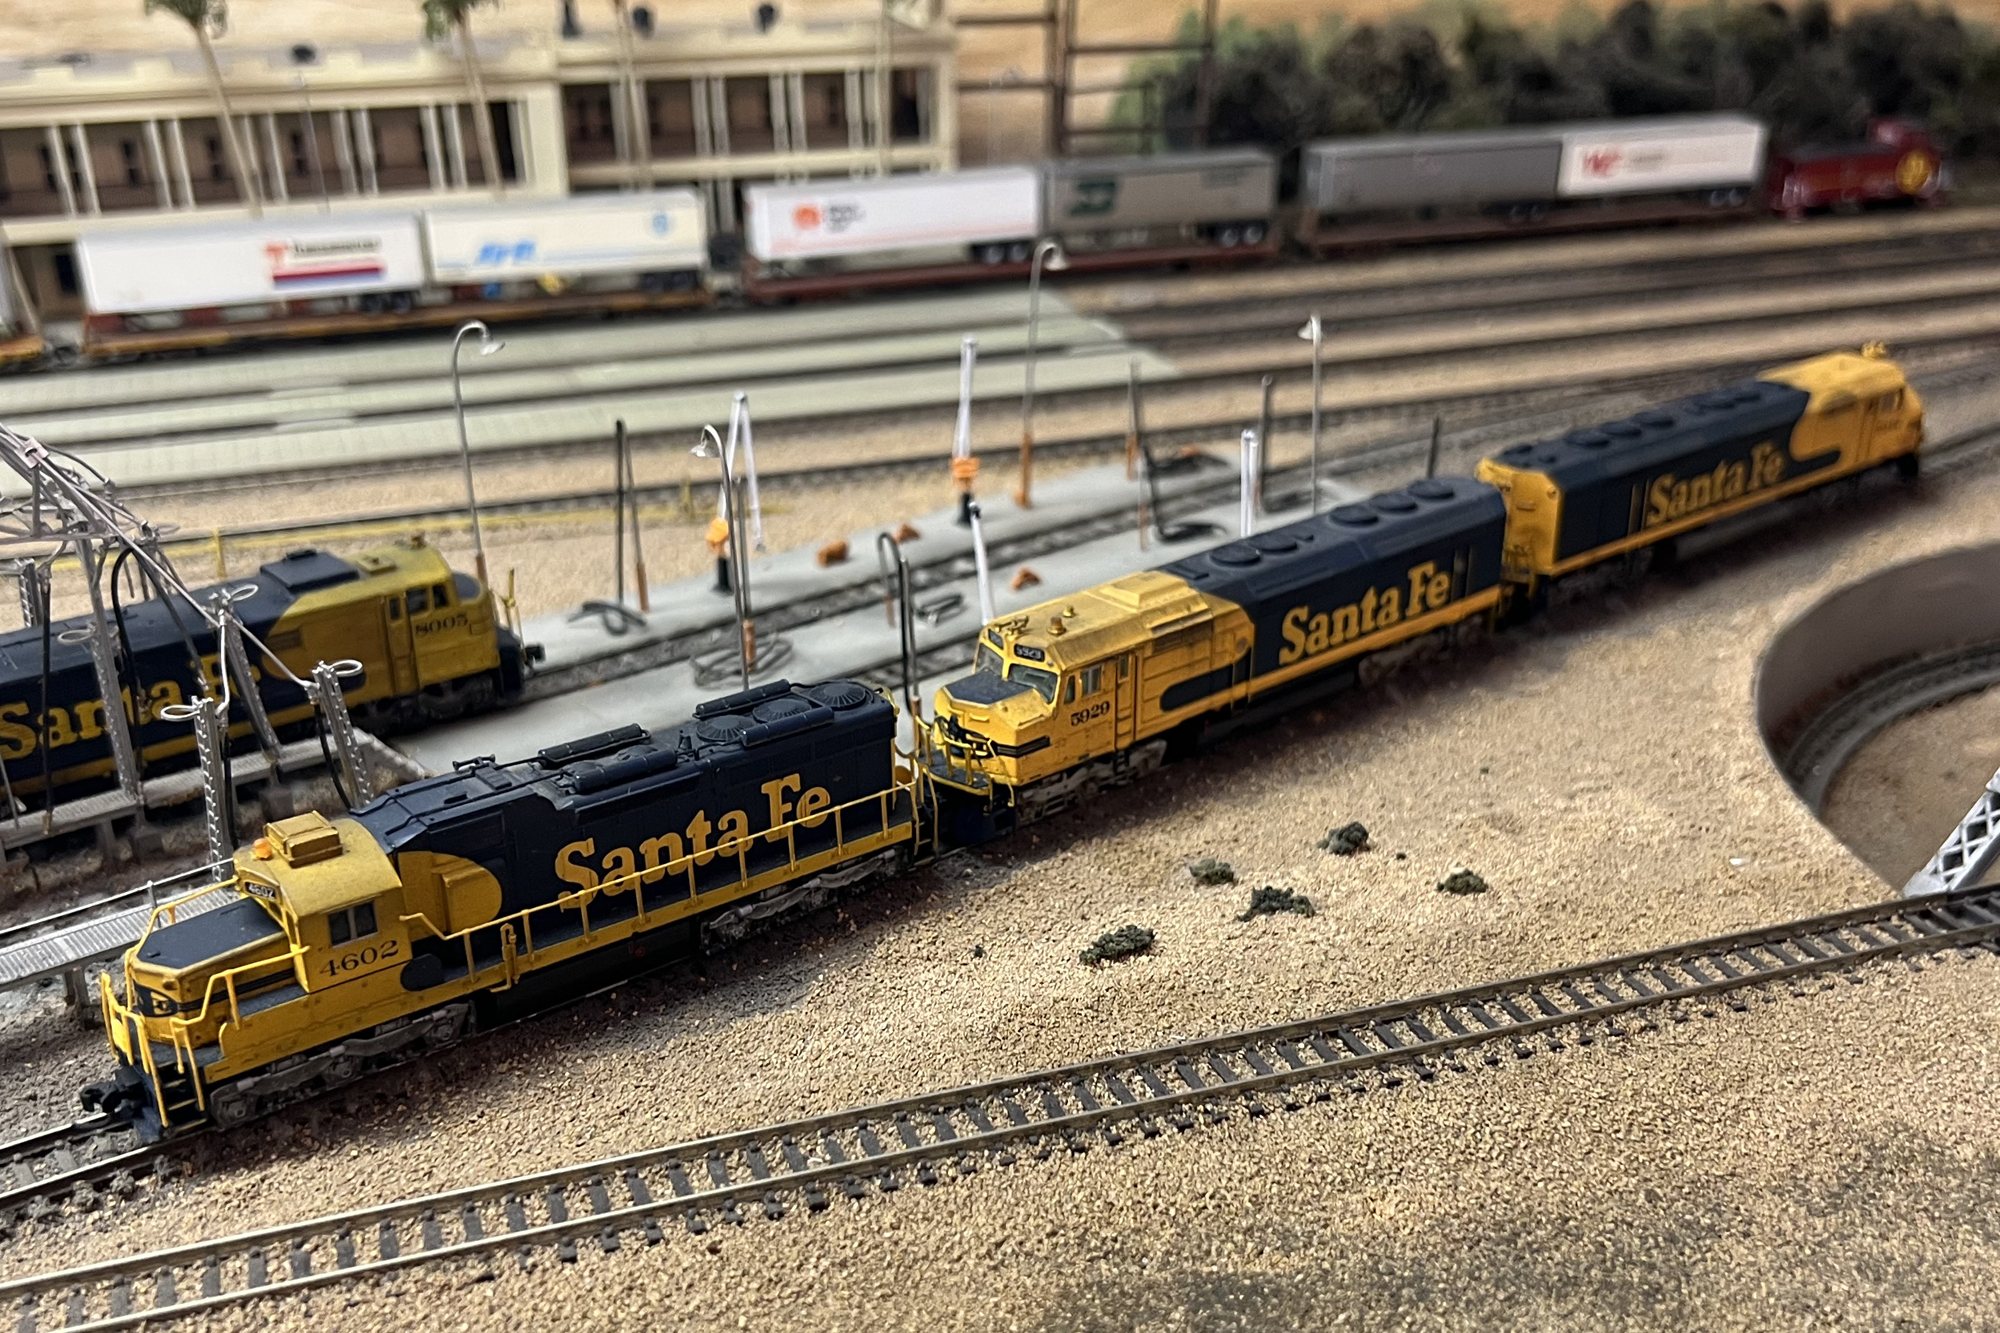 Several Santa Fe locomotives on Mike Komo's n scale model railroad layout.